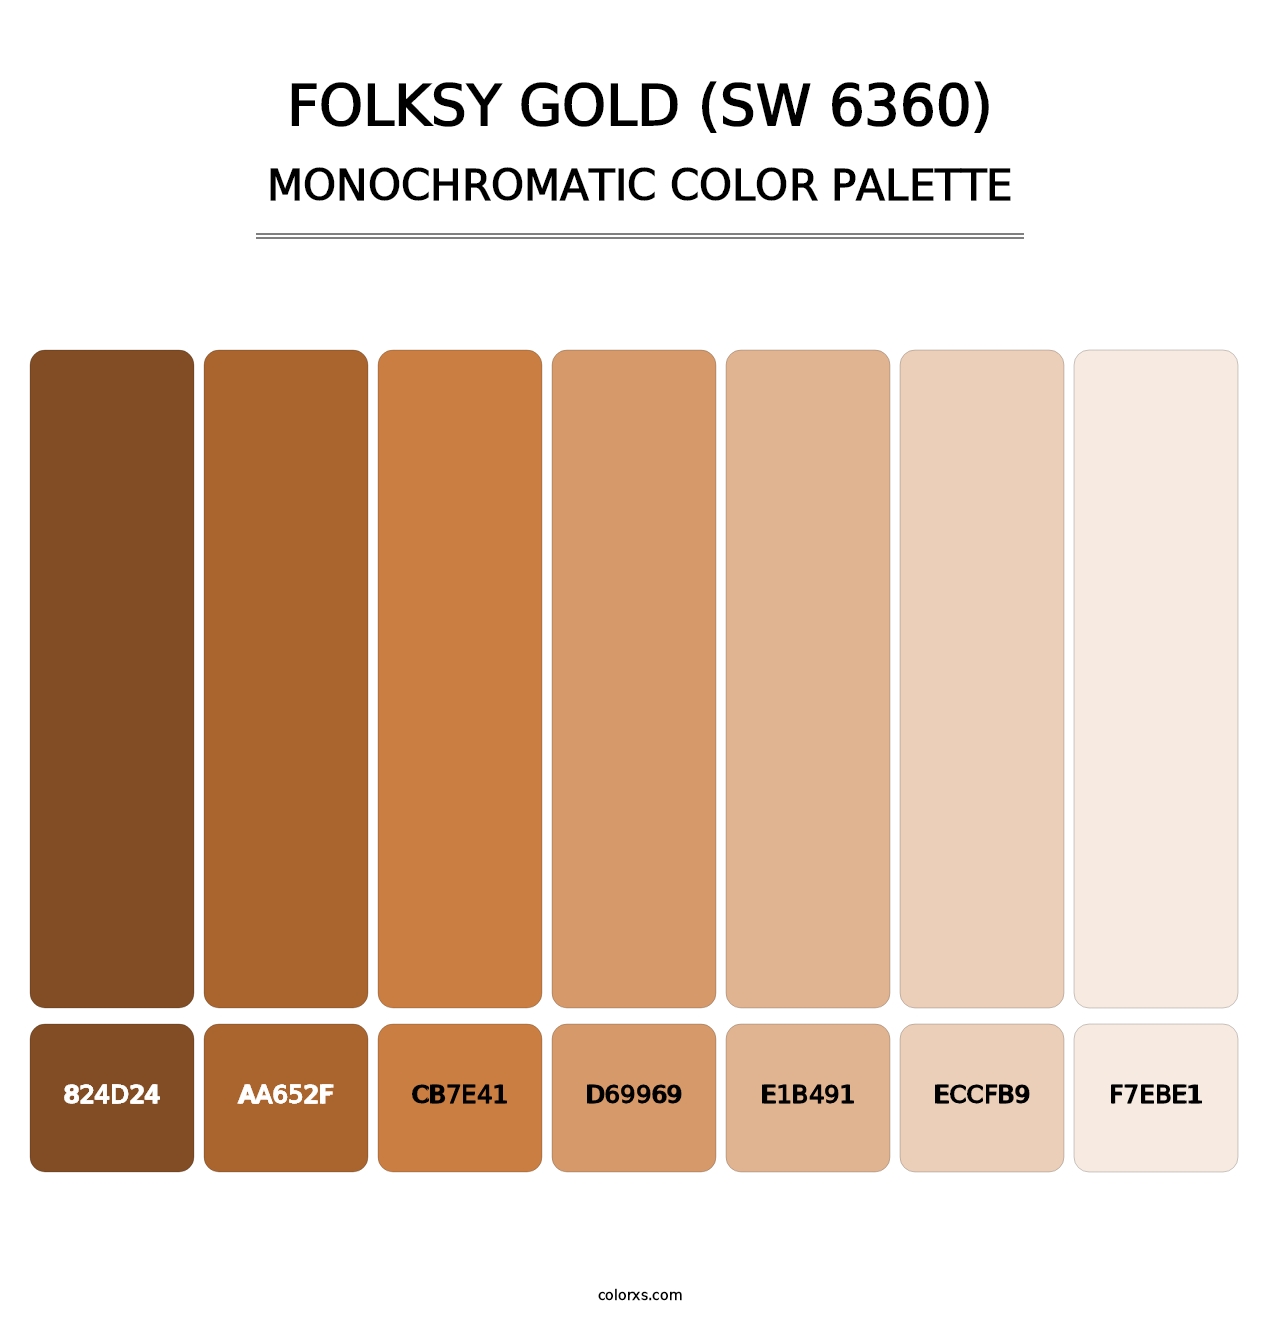 Folksy Gold (SW 6360) - Monochromatic Color Palette